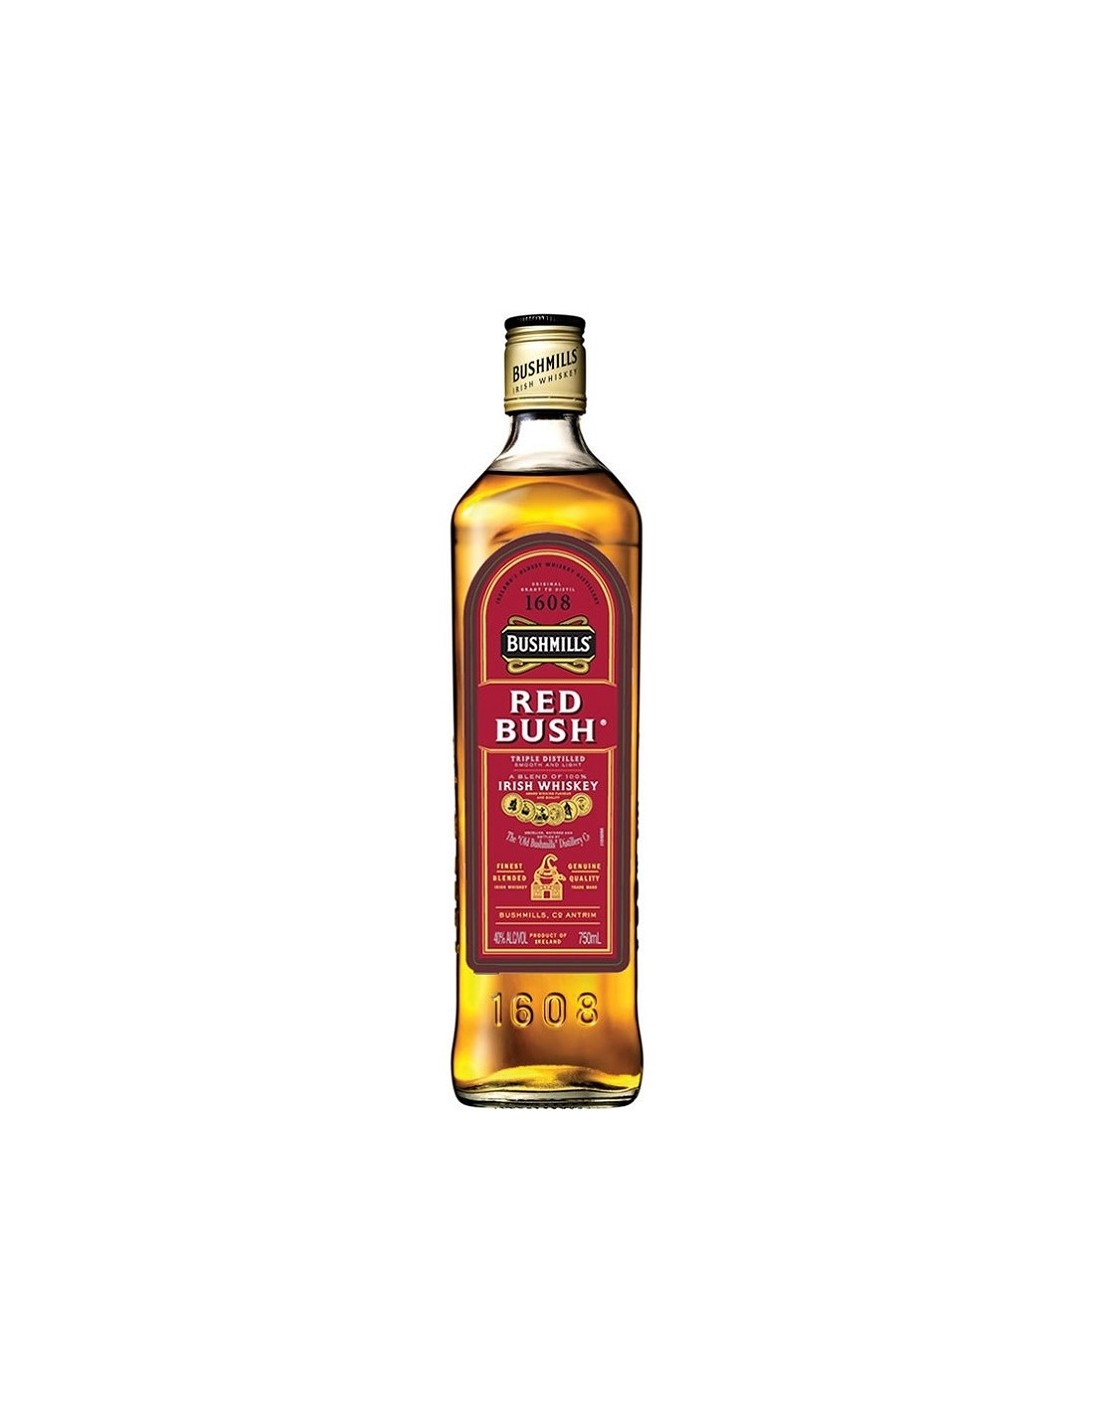 Whisky Bushmills Red Bush, 0.7L, 40% alc., Irlanda alcooldiscount.ro